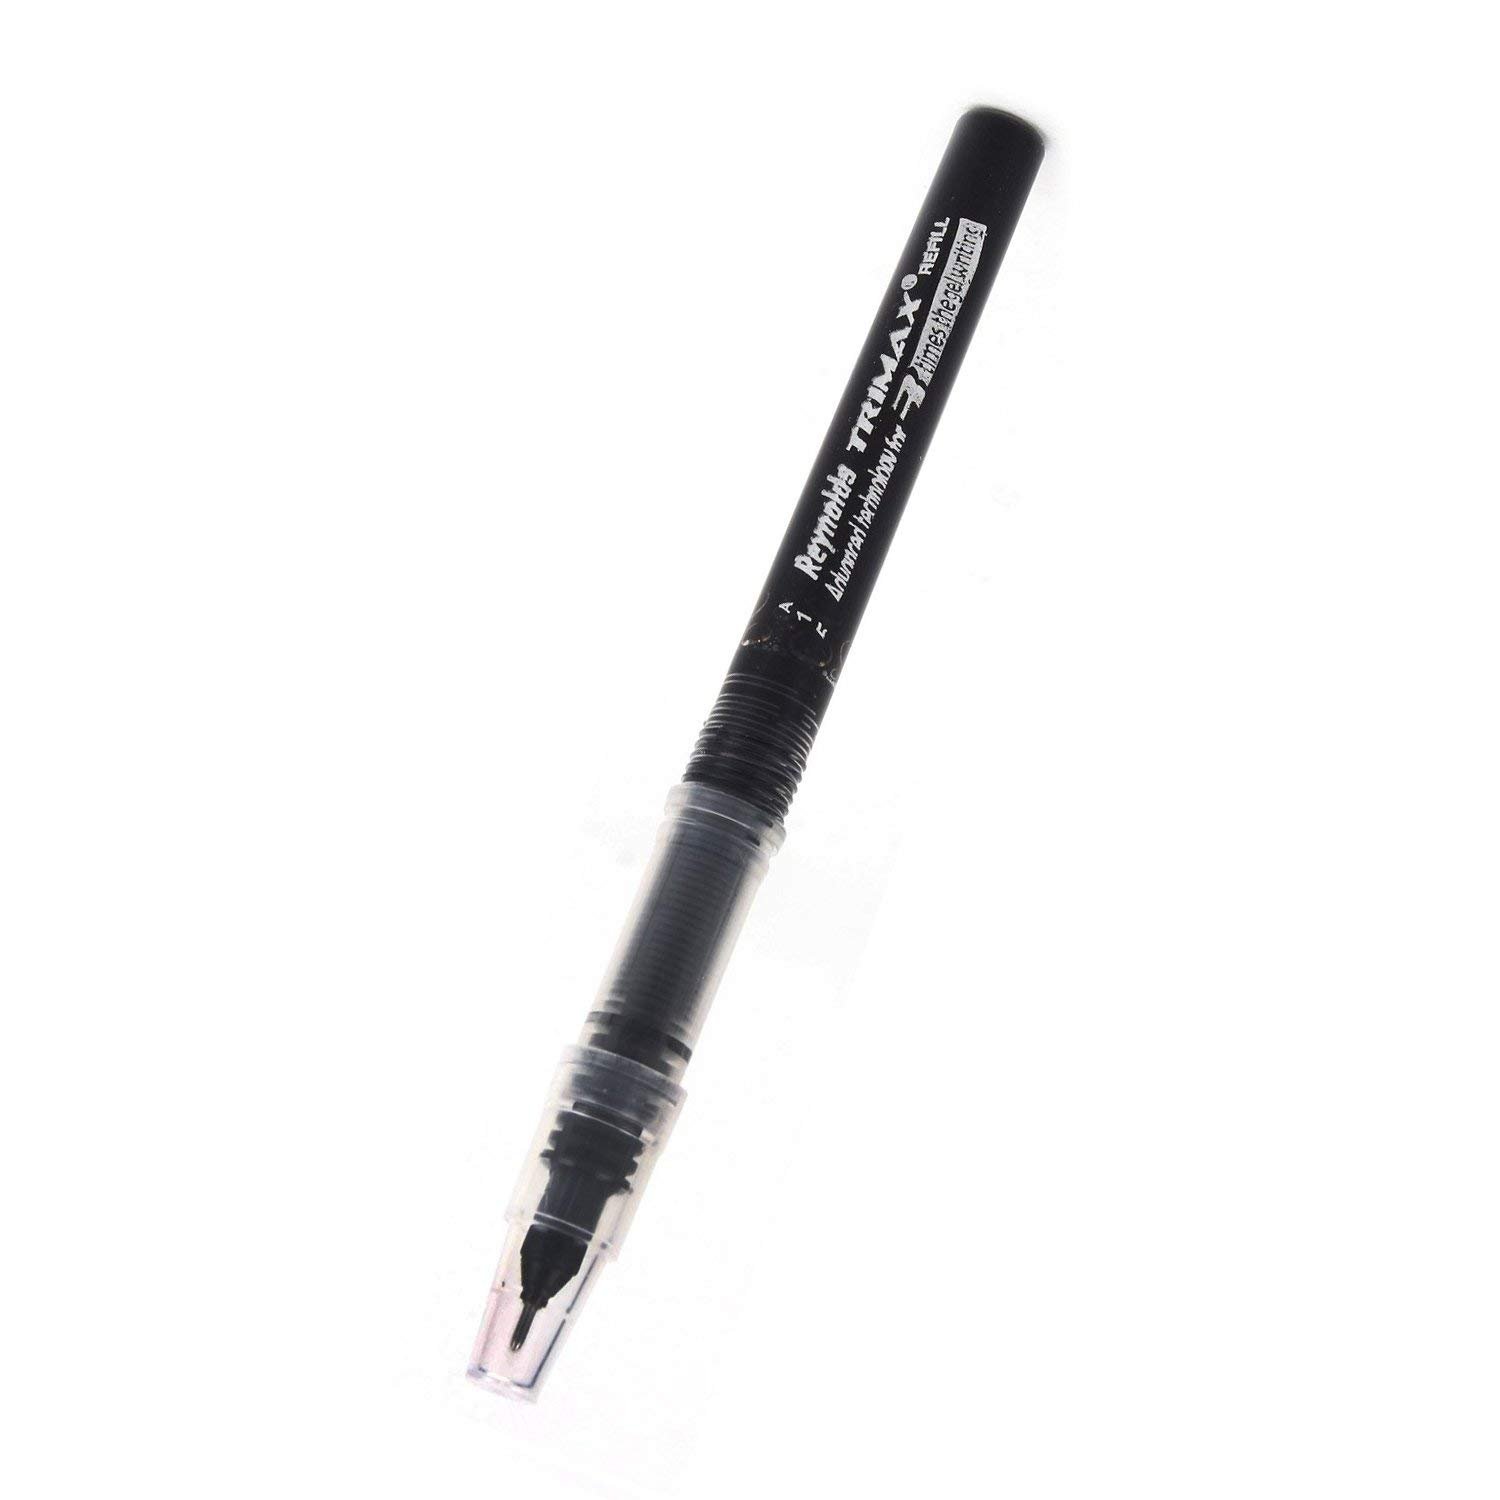 Reynolds Trimax Pen Refill (Black)